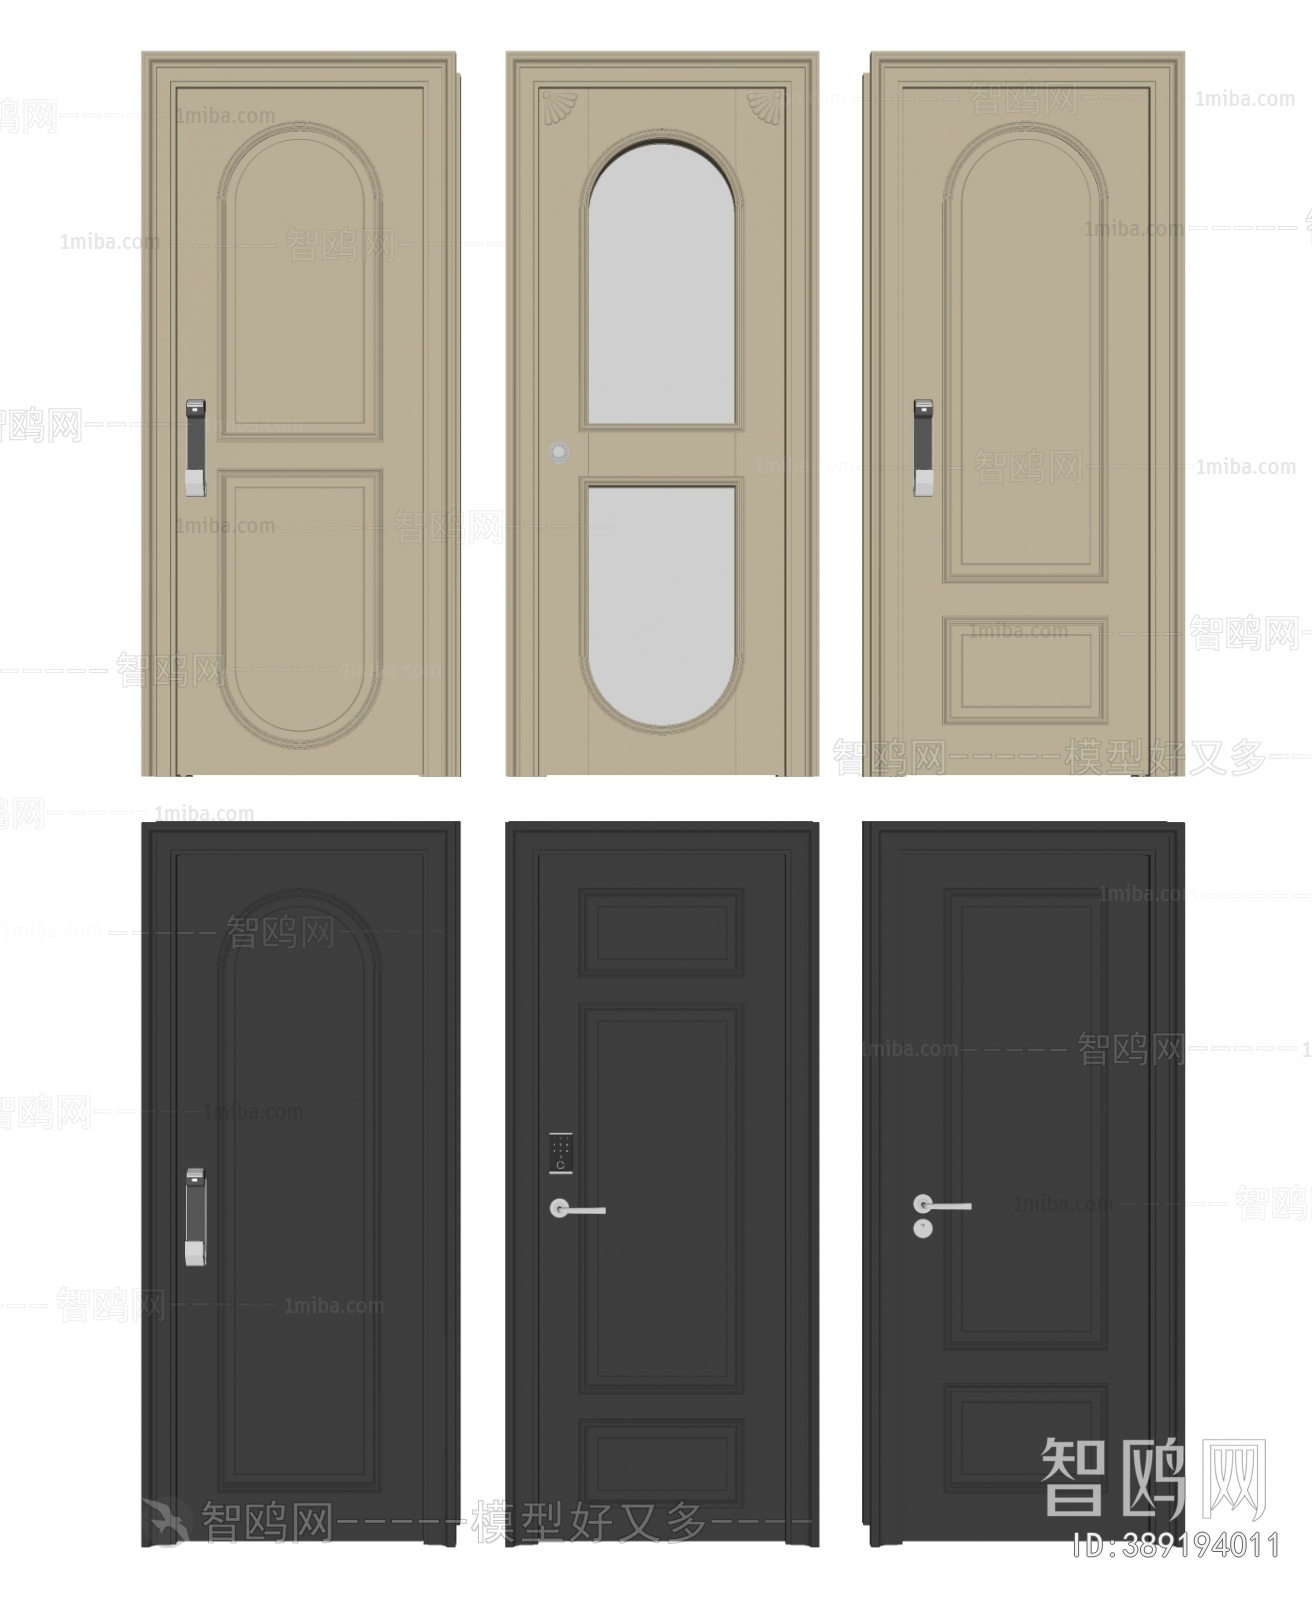 French Style Door